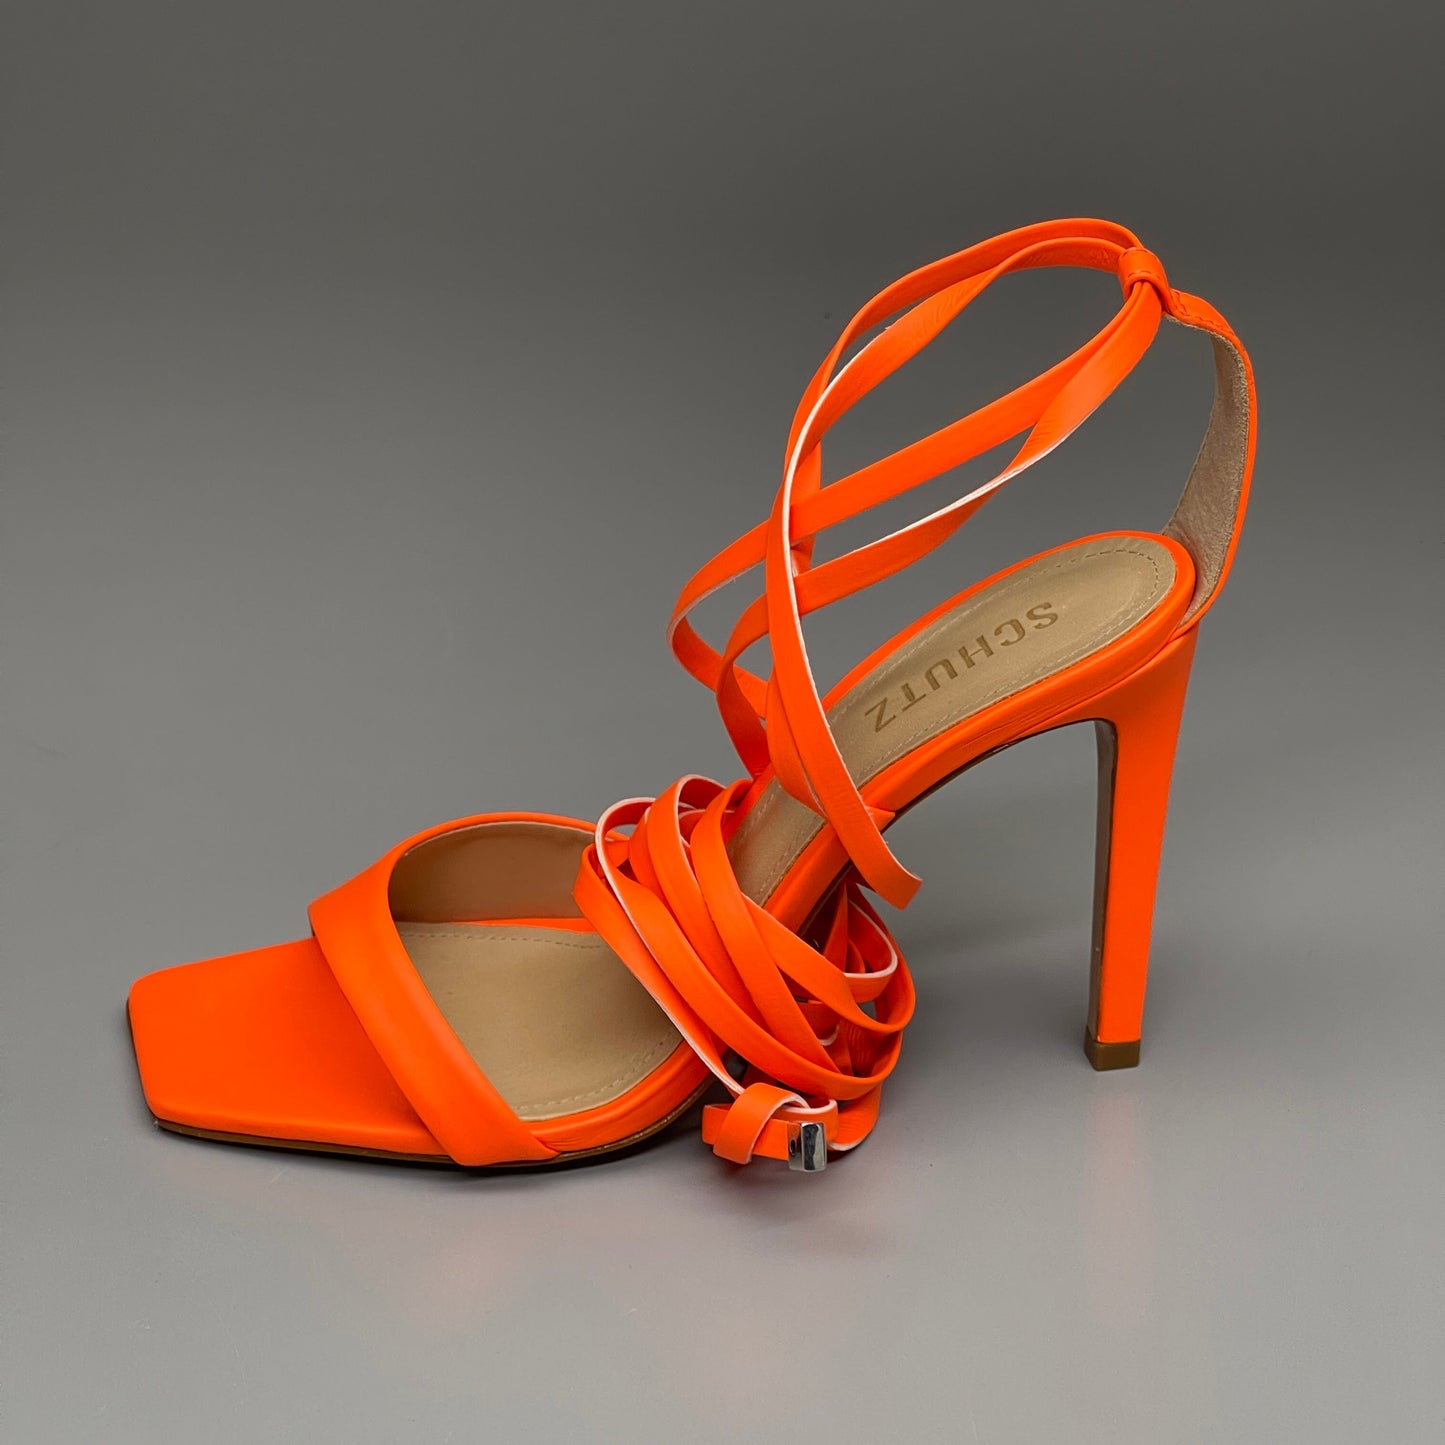 SCHUTZ Bryce Ankle Tie Women's High Heel Leather Strappy Sandal Acid Orange Sz 8.5 (New)